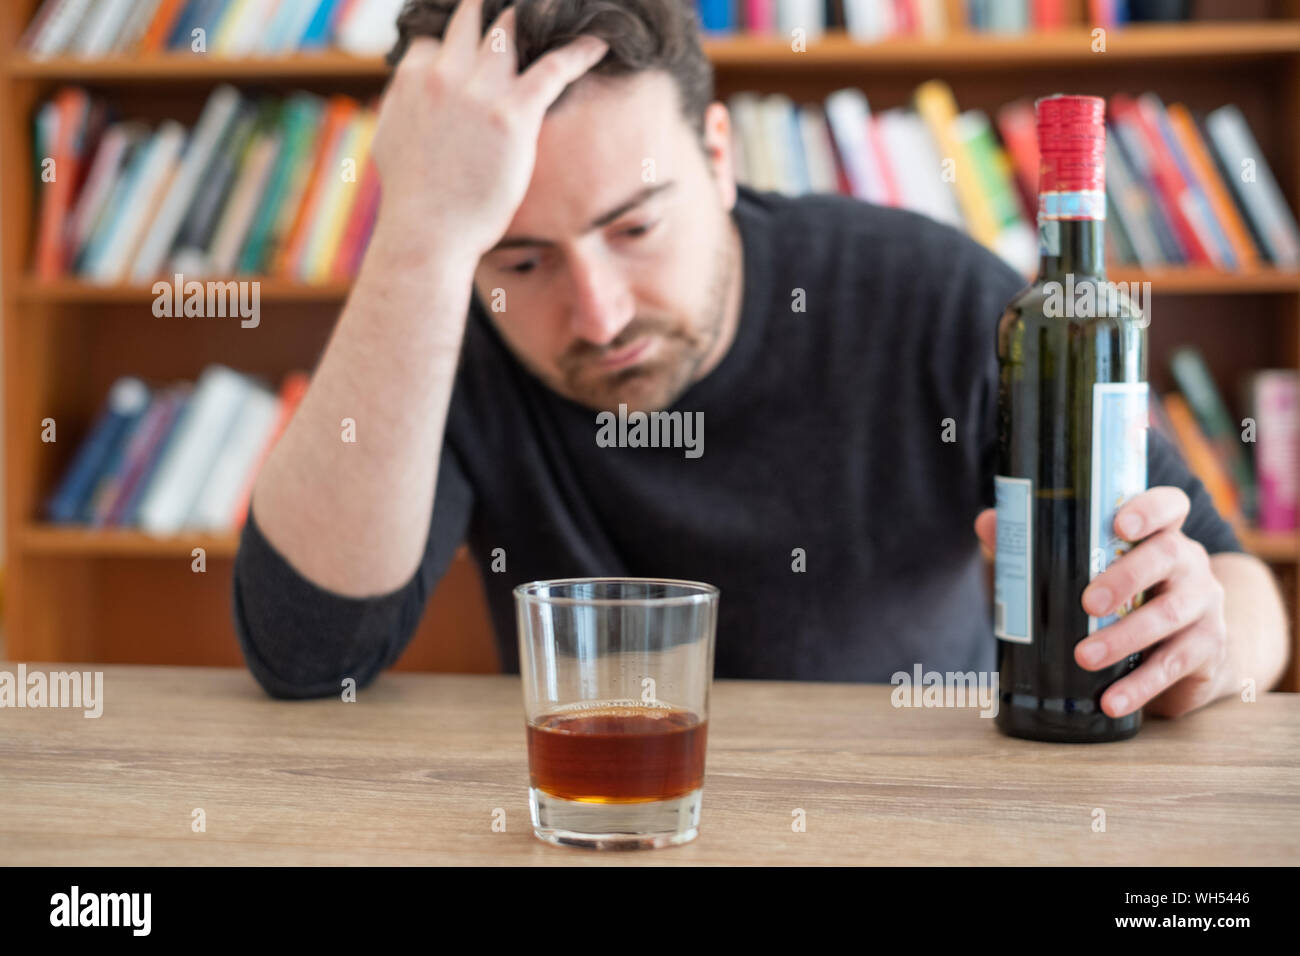 Depressed man drinking hard liquor at home Stock Photo